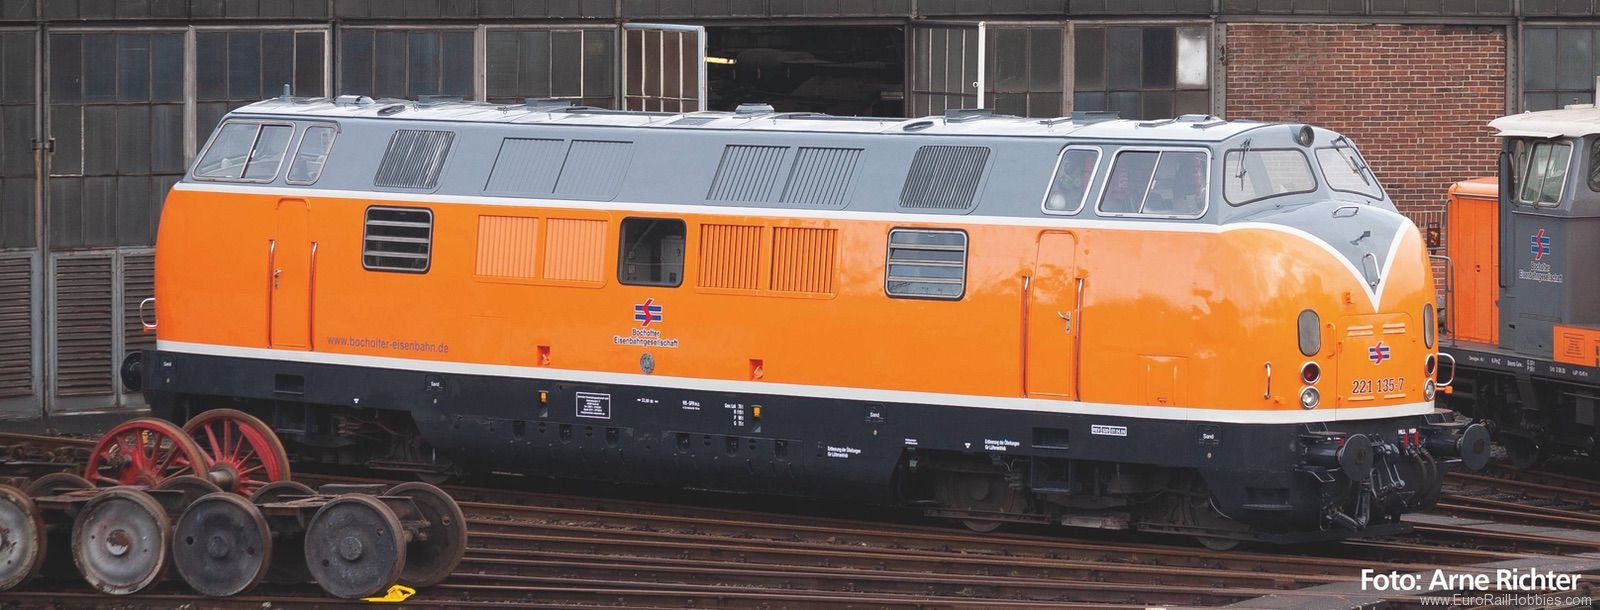 Piko 40508 N Class 221 BEG VI Diesel Locomotive